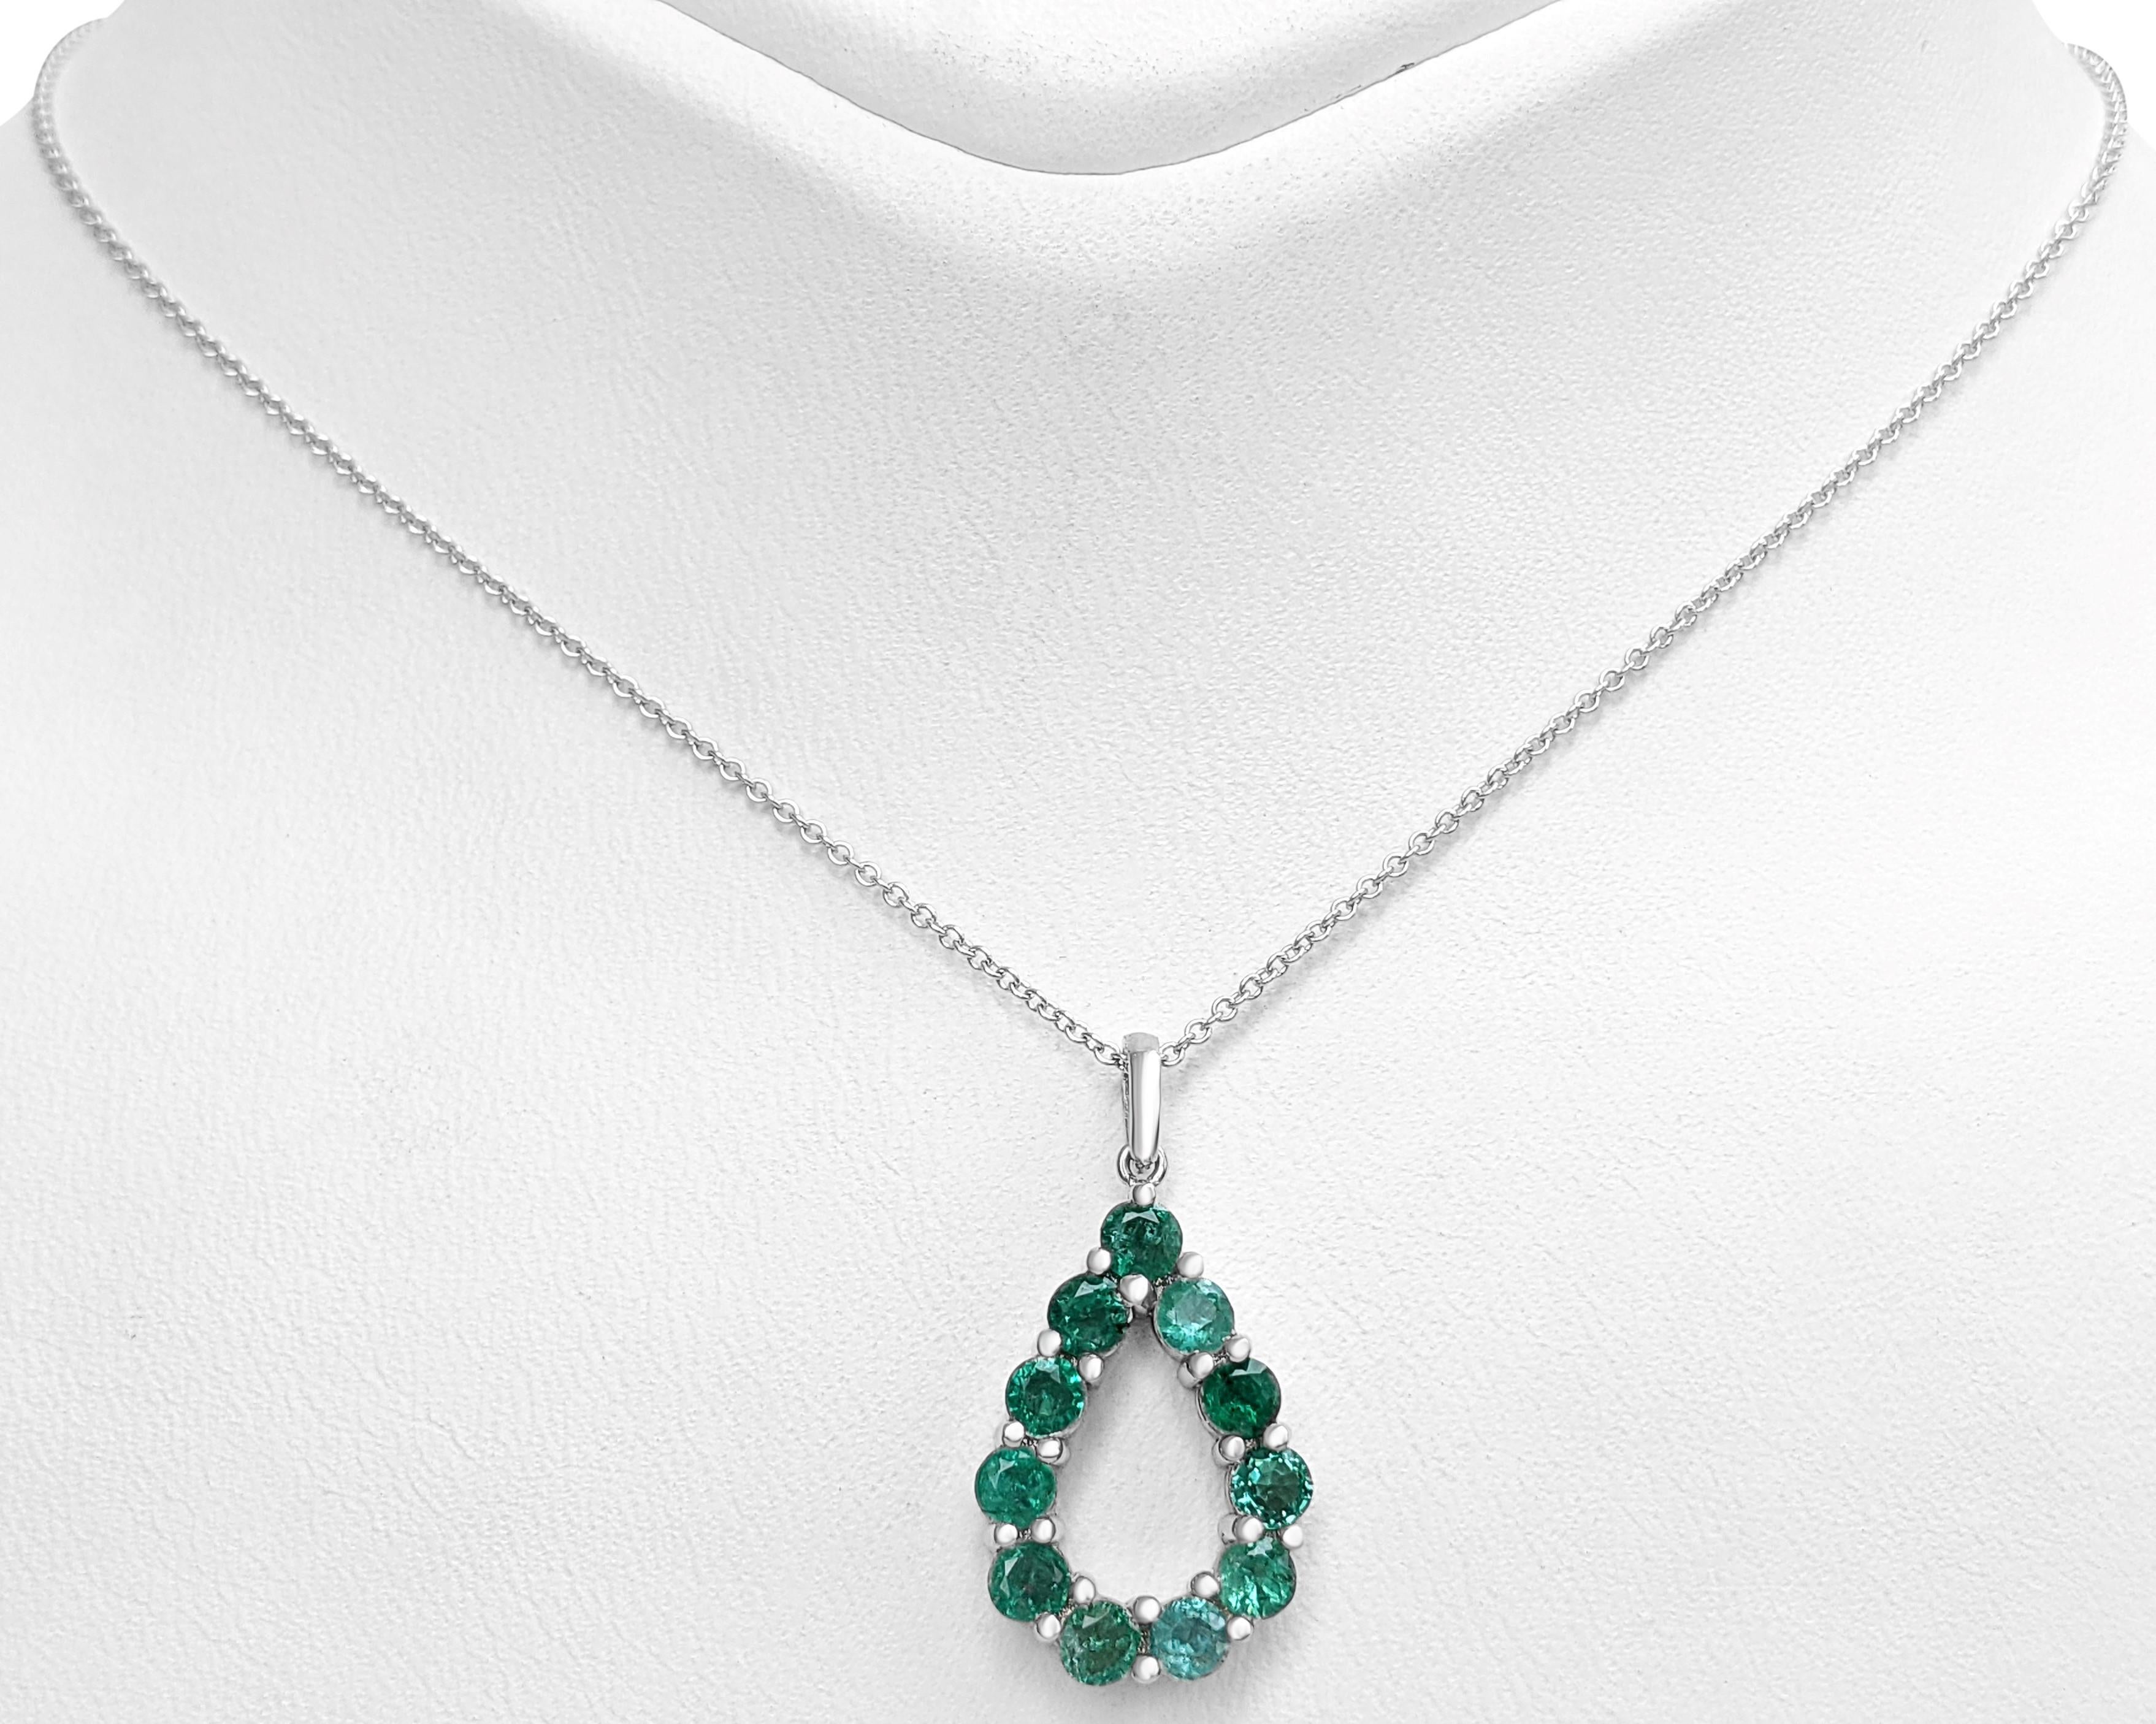 NO RESERVE! 1.61 Carat Emerald, 14 Karat White Gold, Necklace with Pendant 2